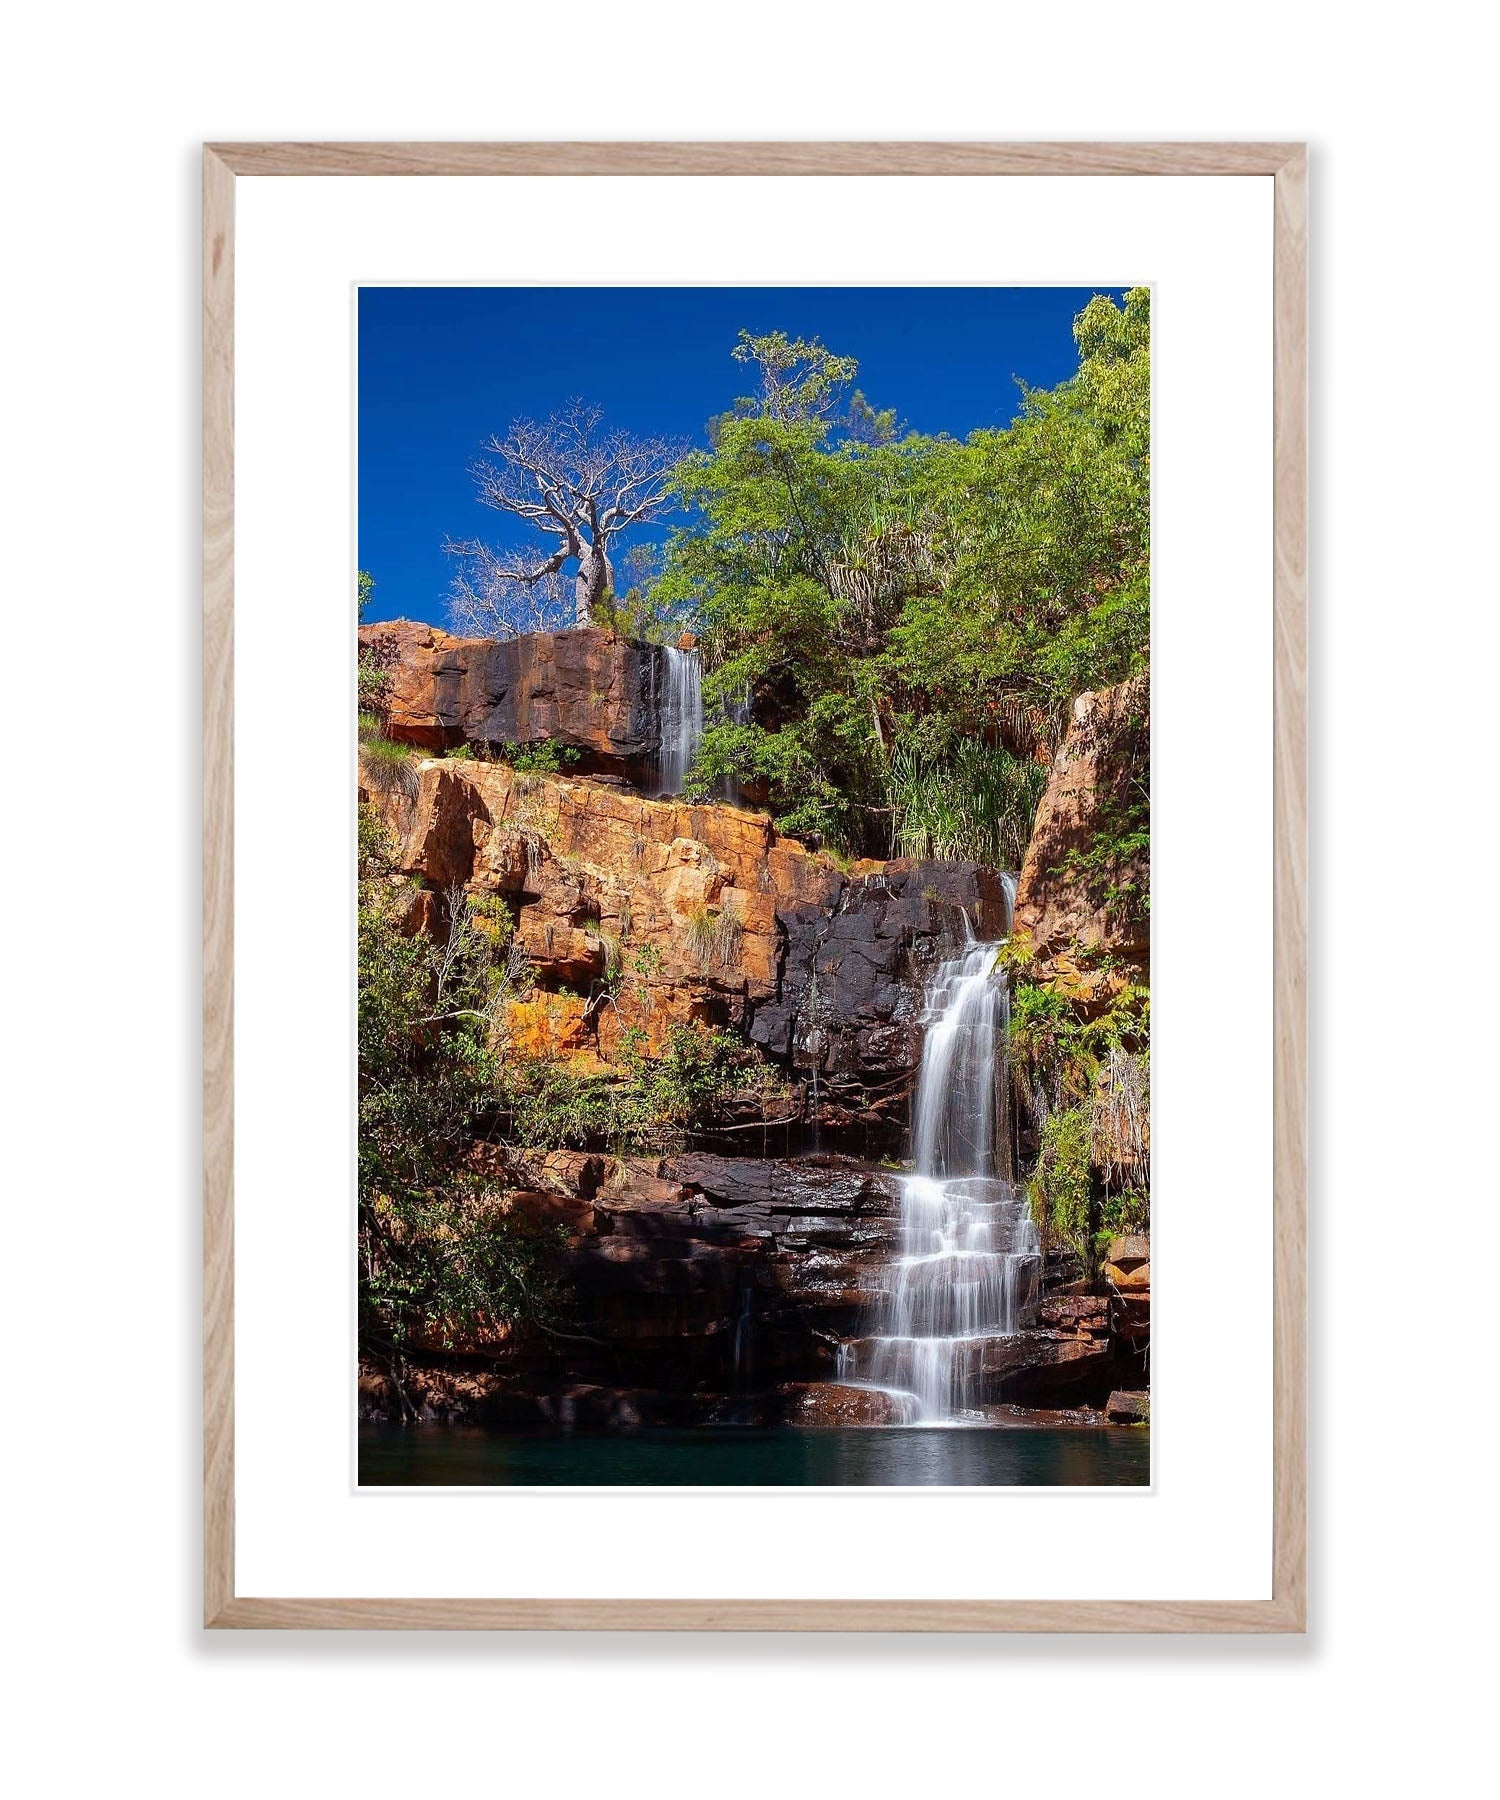 Galvin's Waterfall, Gibb River Road, The Kimberley, Western Australia